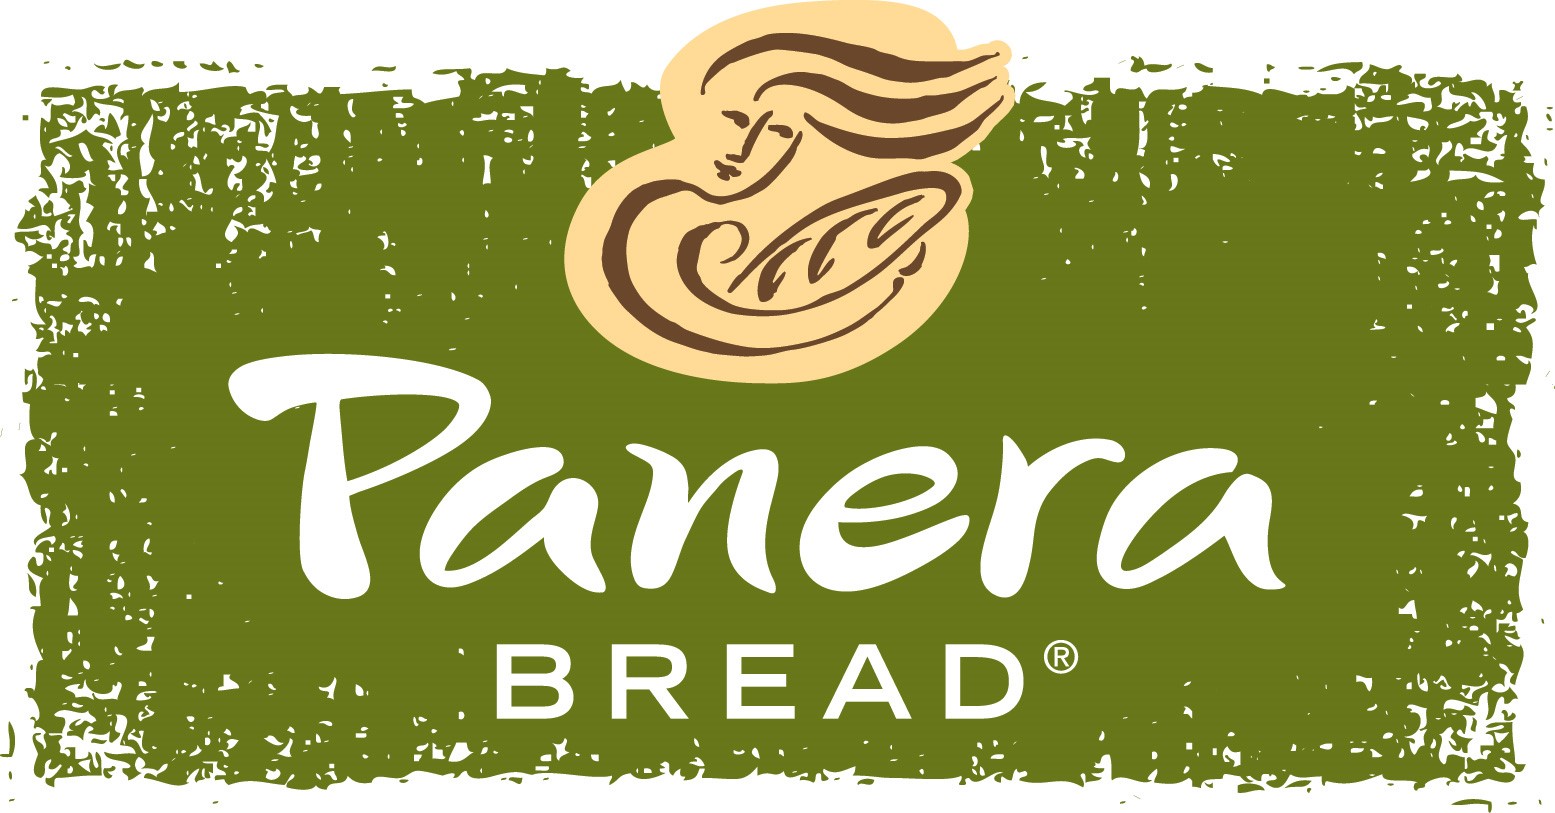 small town scandals - panera bread logo - Hose Panera Bre A D